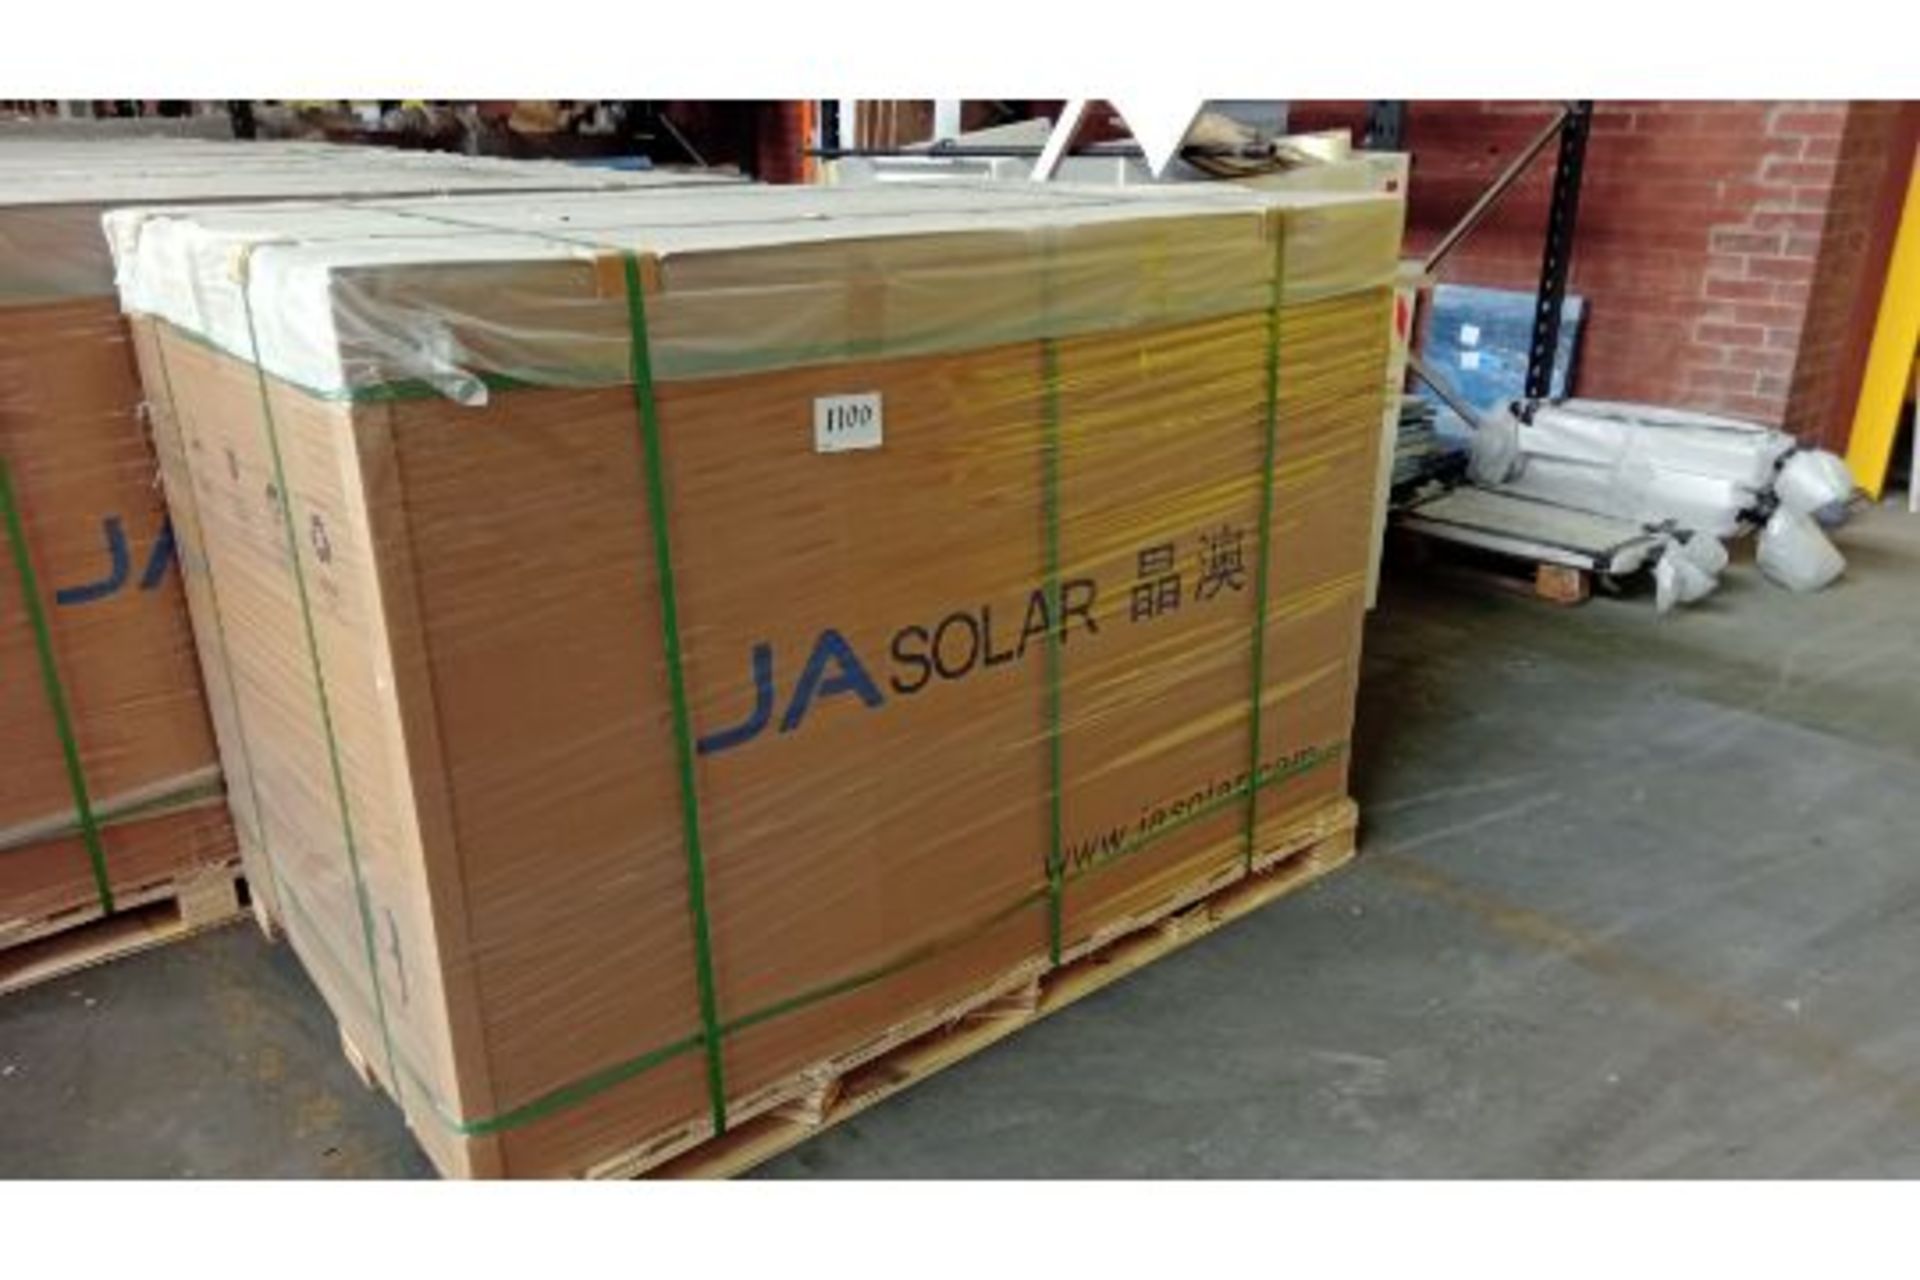 36: JA Solar JAM54S31-395/MR Solar Panel PERC Half-Cell Black Module 395W